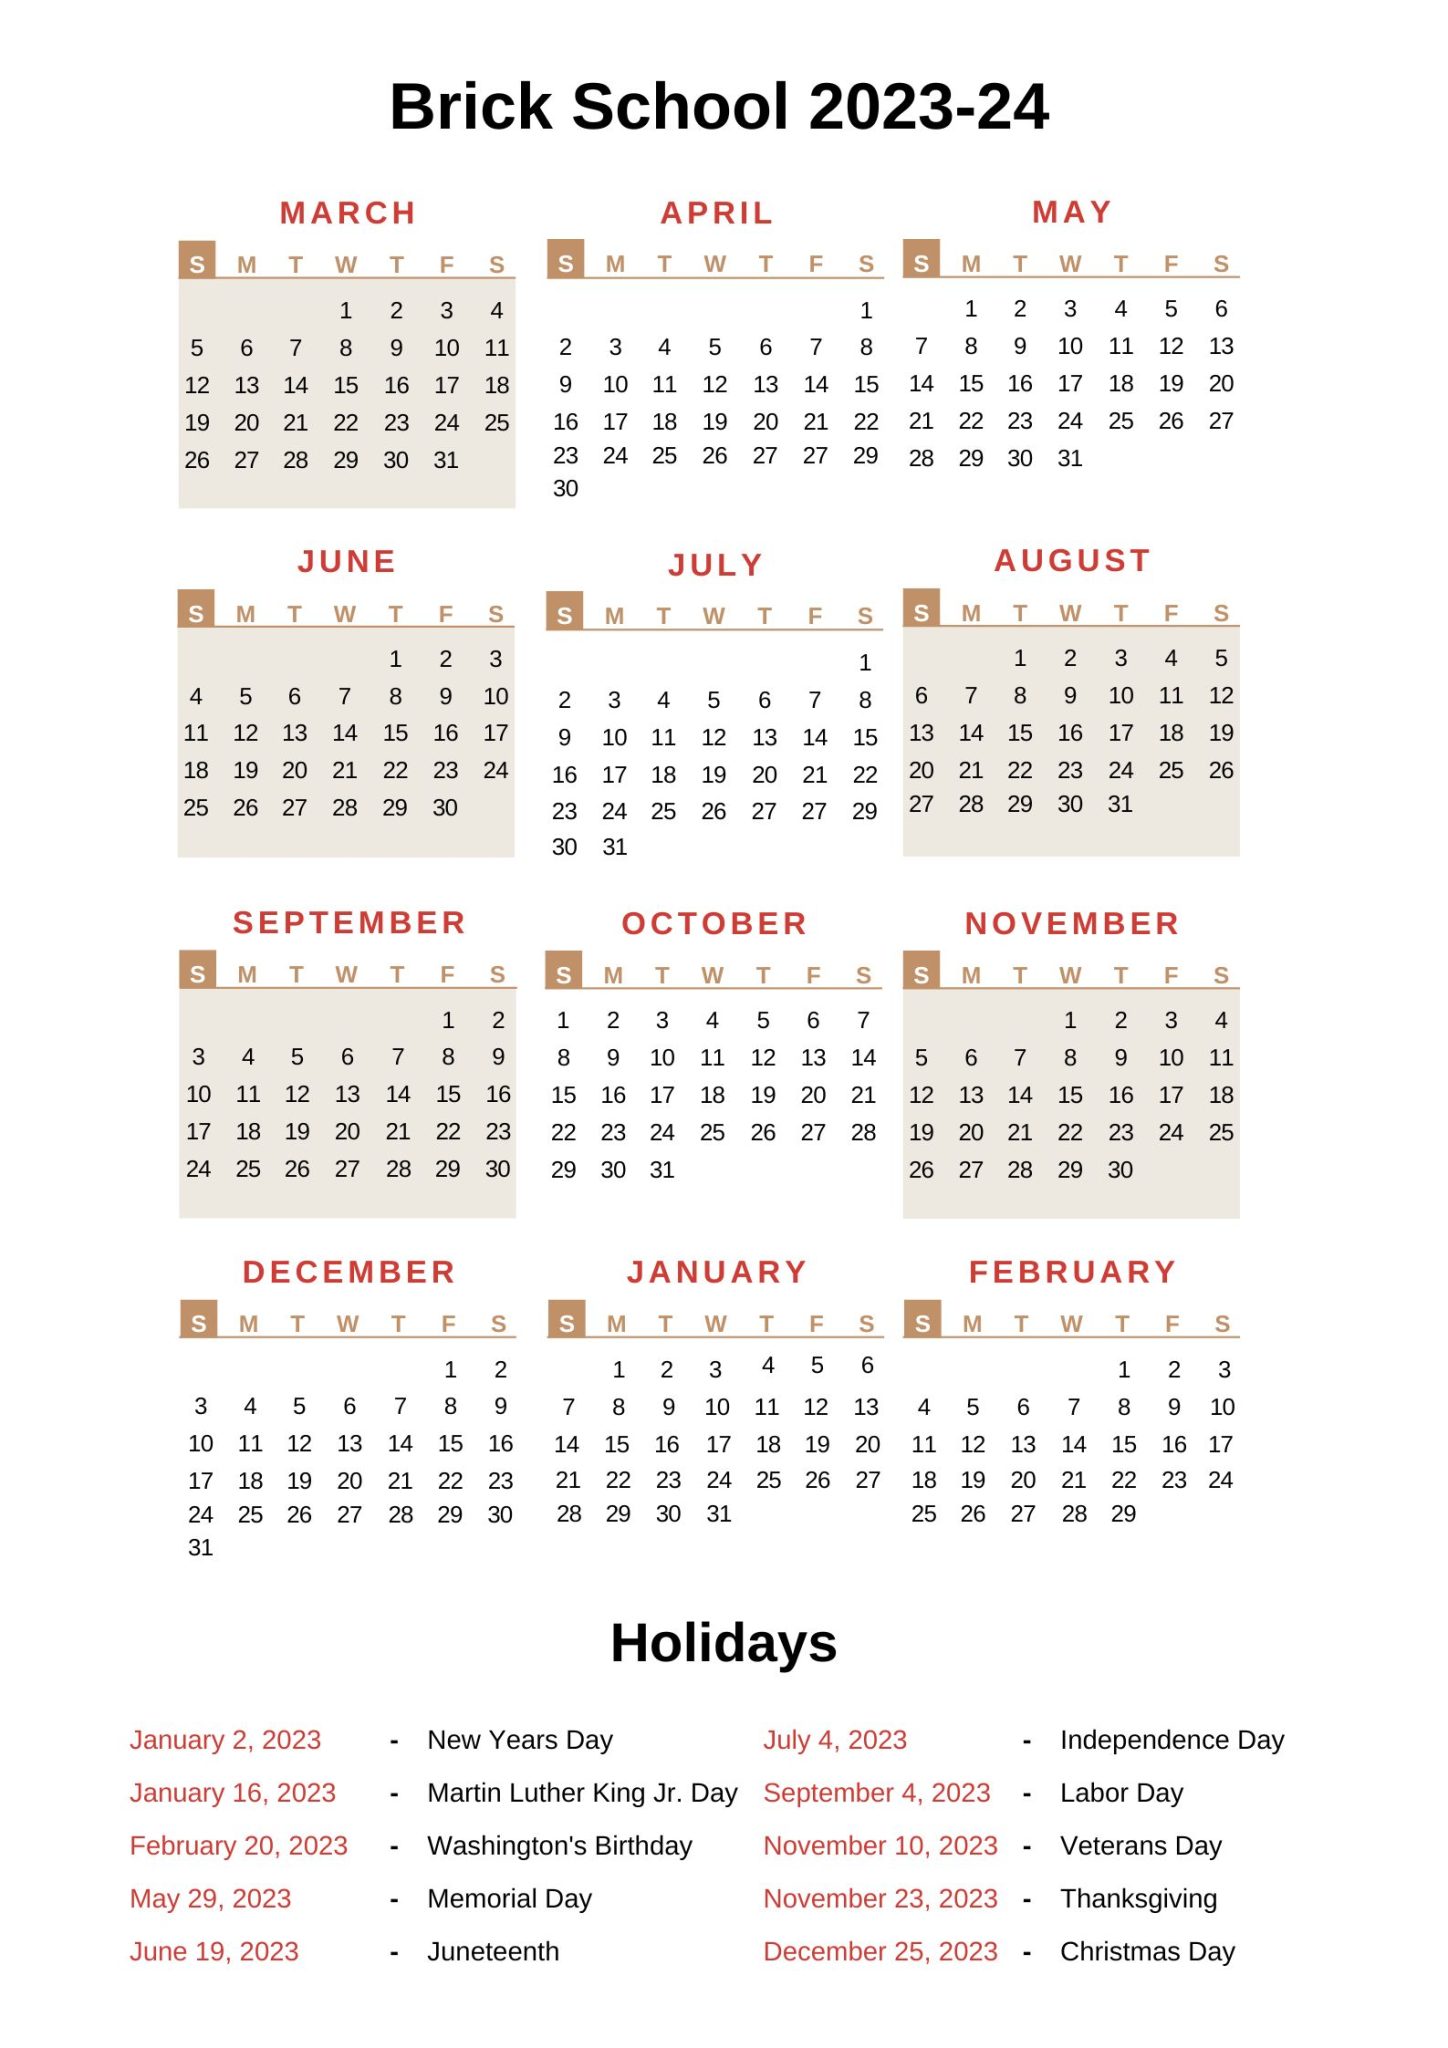 Brick Schools Calendar 2023 24 BPS with Holidays